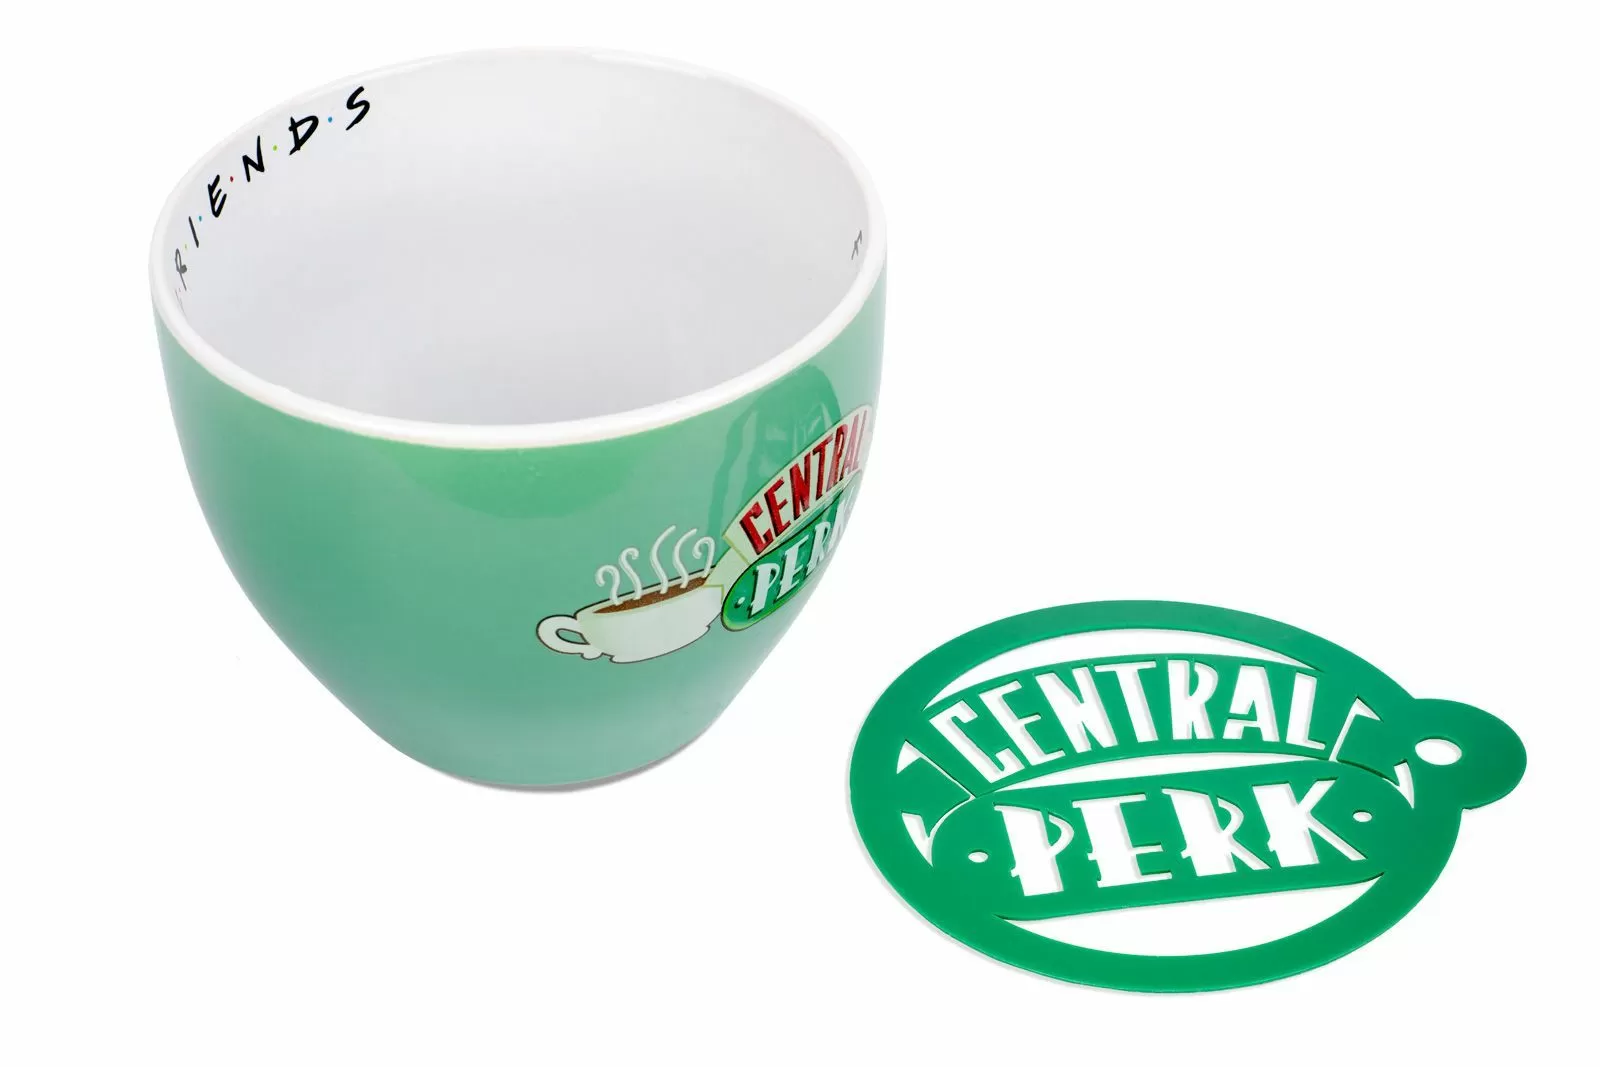 Кружка Friends Central Perk Green. Cappuccino Mug